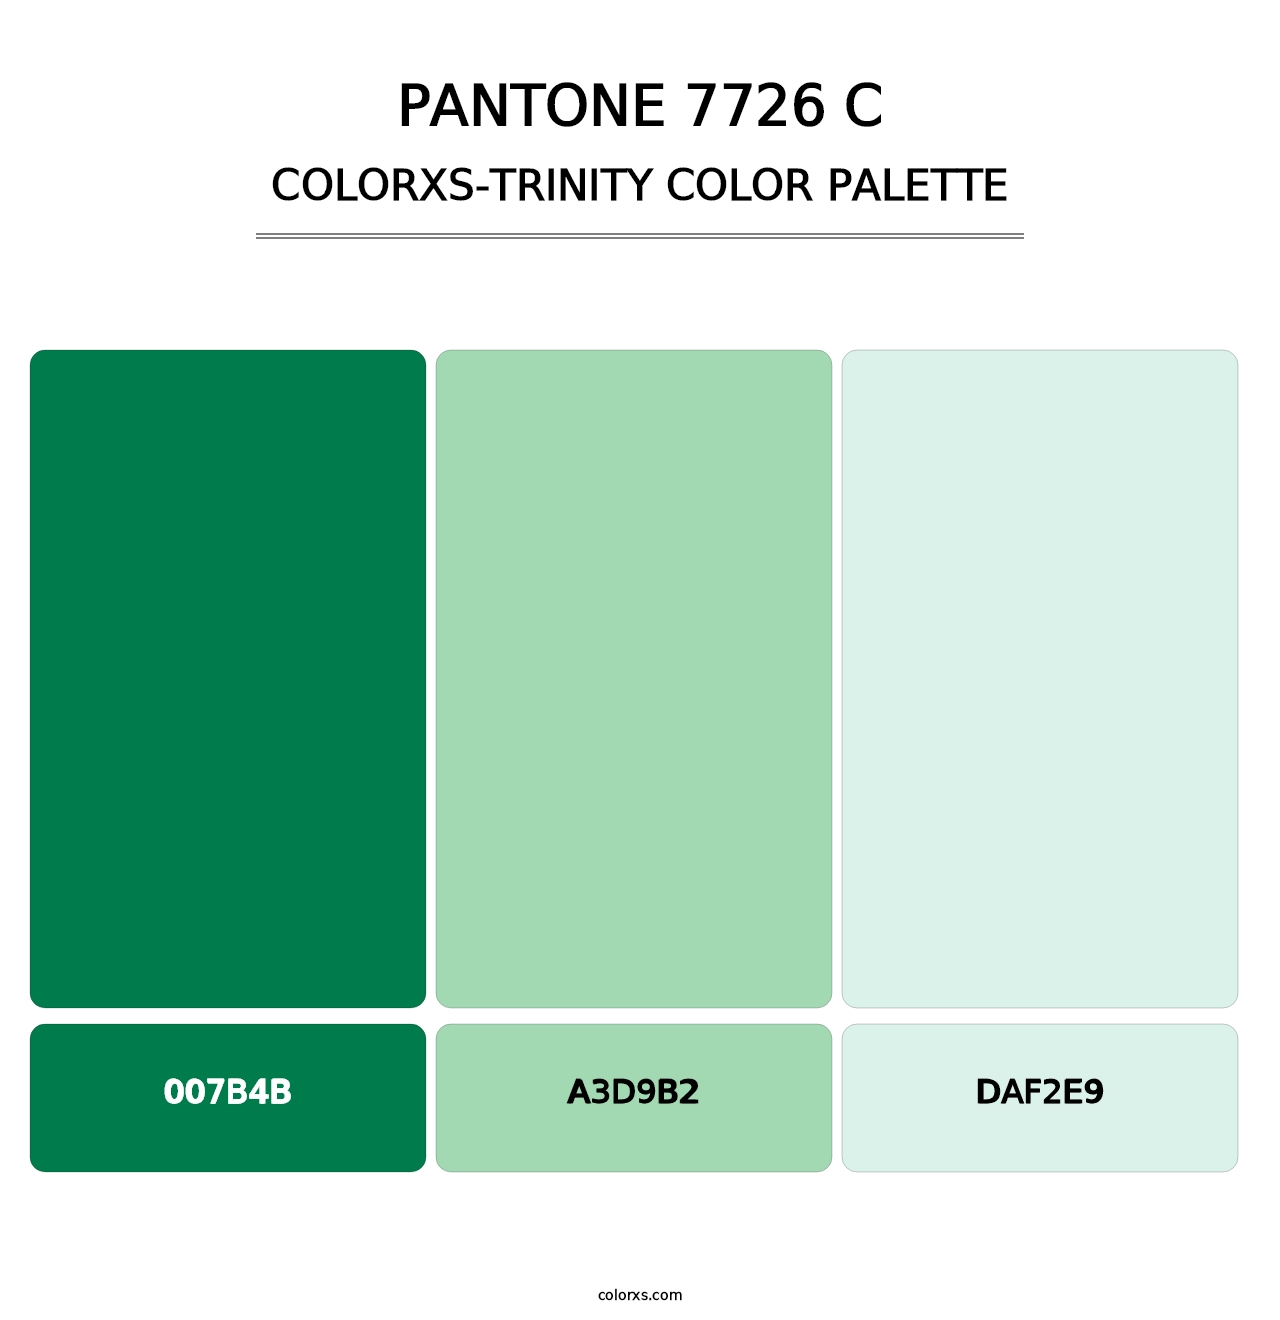 PANTONE 7726 C - Colorxs Trinity Palette